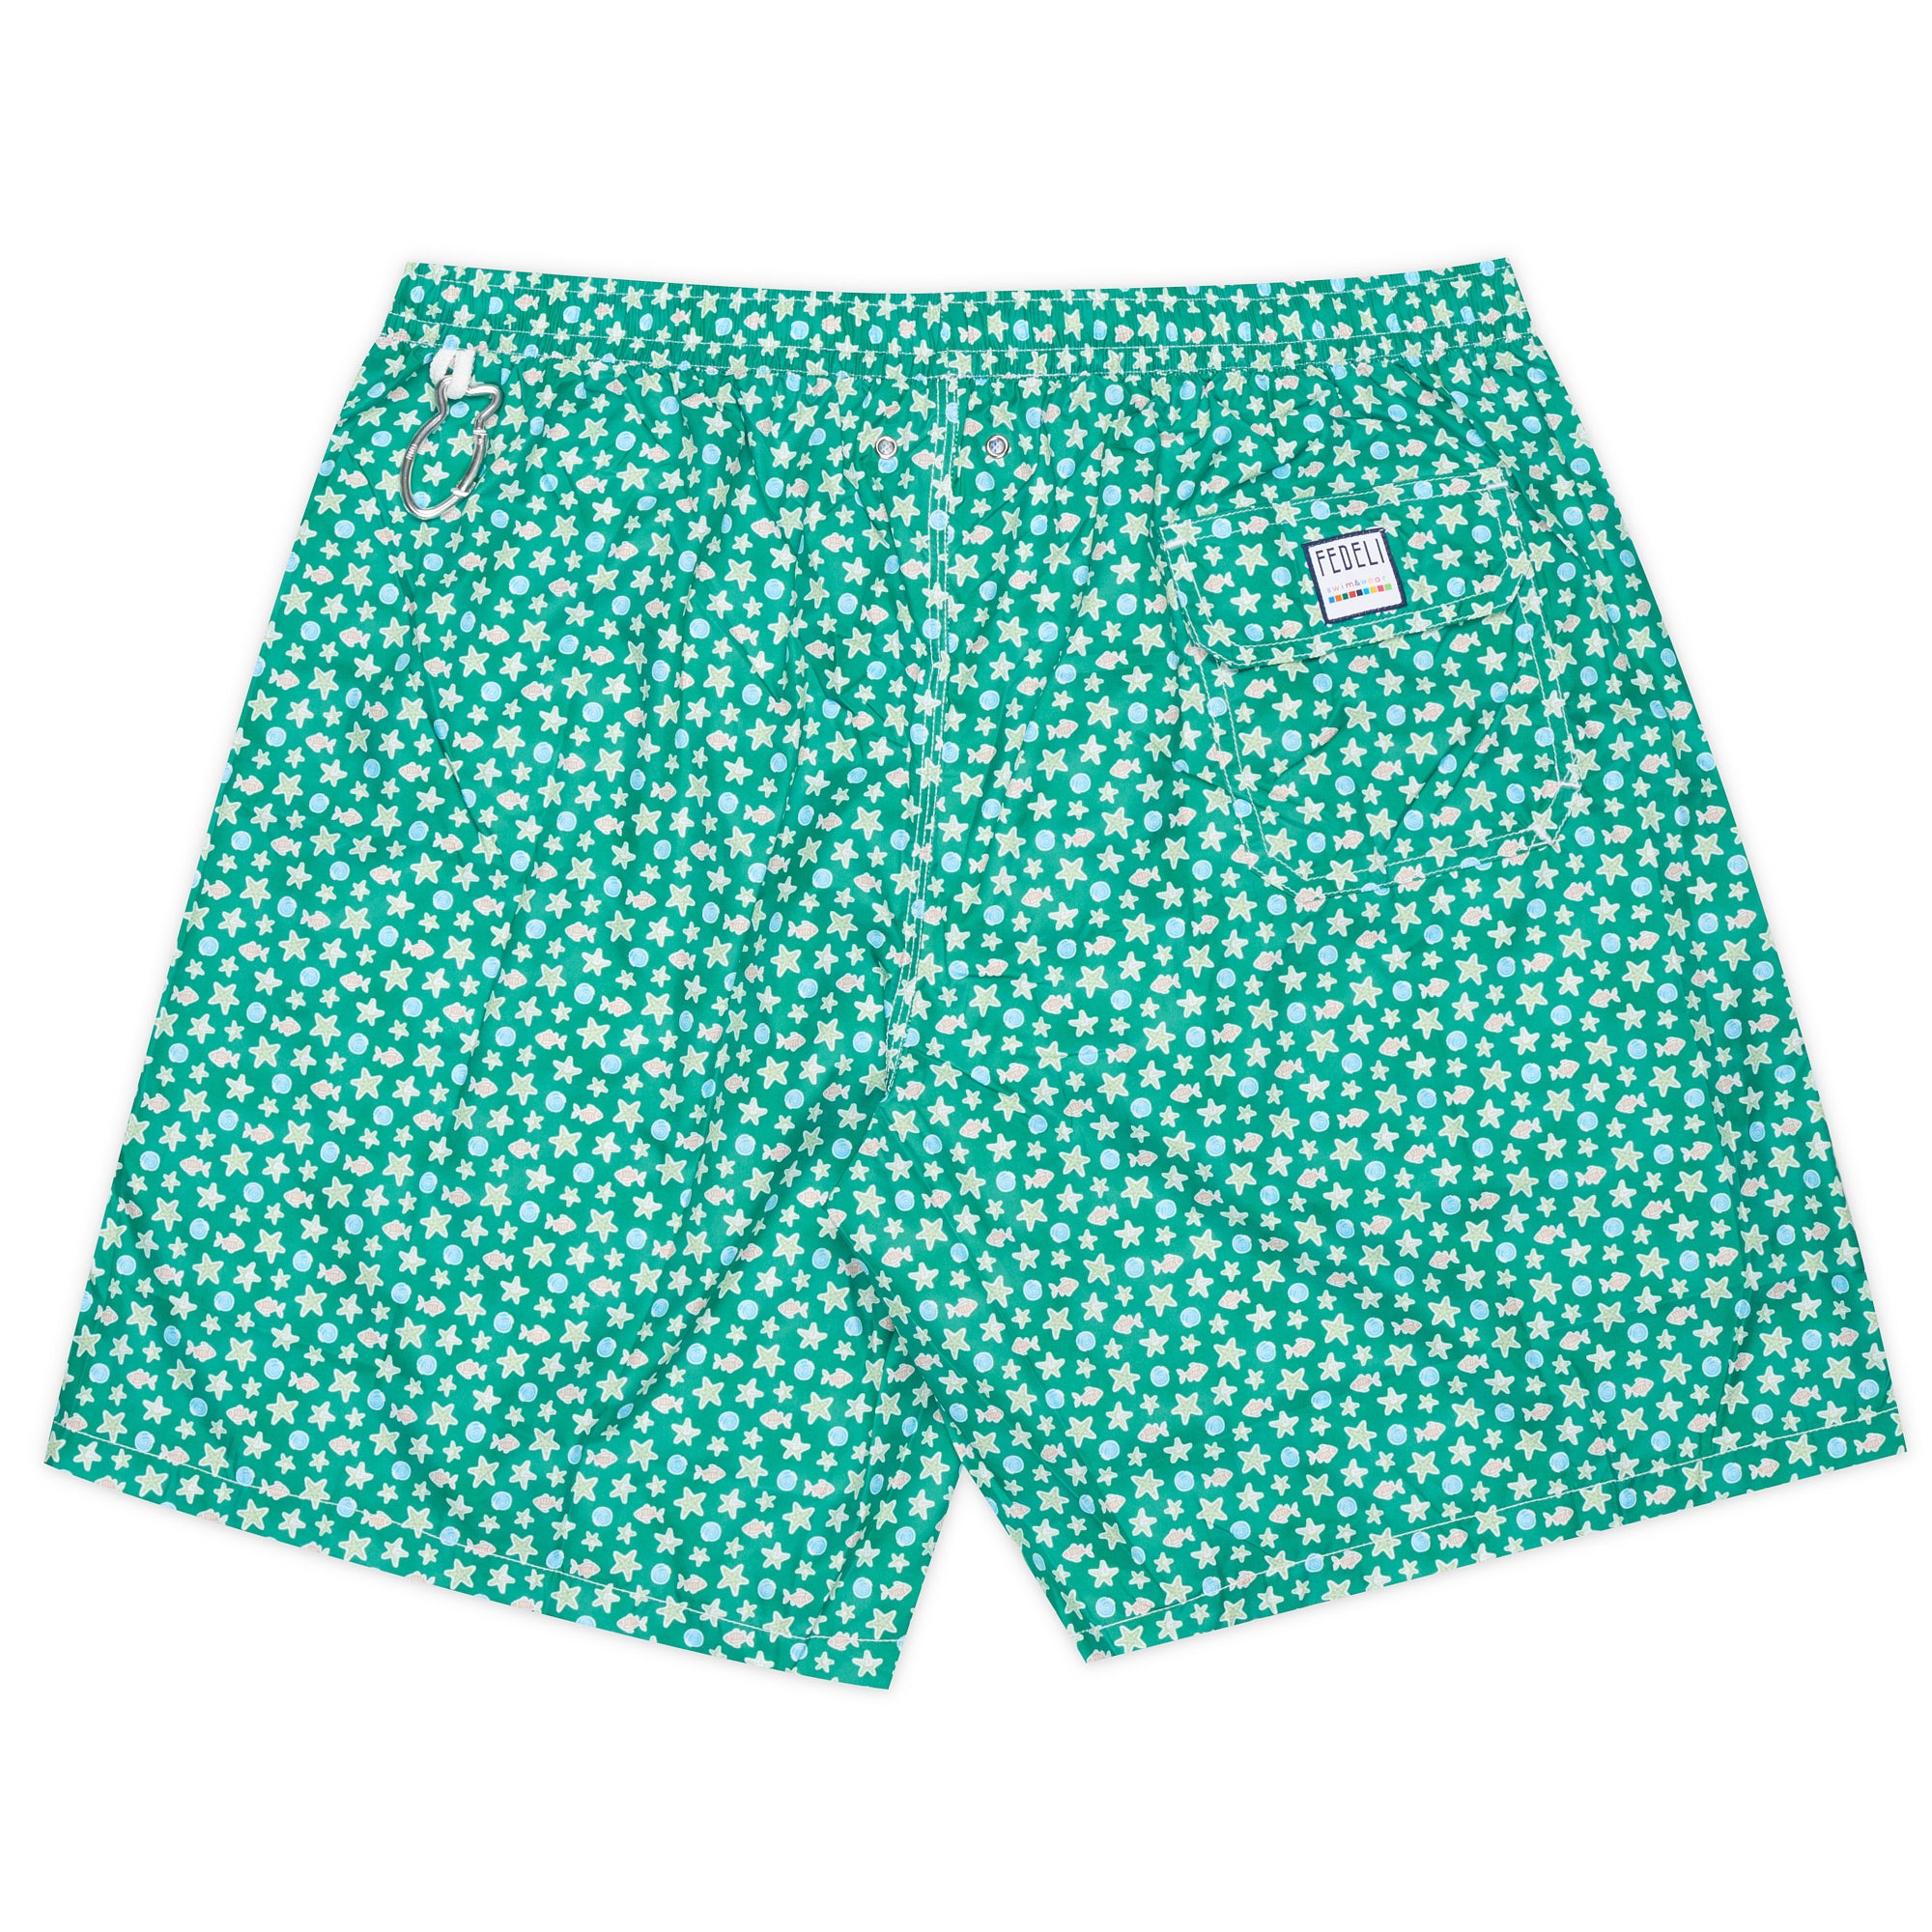 FEDELI Green Sea Animal Print Positano Airstop Swim Shorts Trunks 40/41 NEW XXXL FEDELI